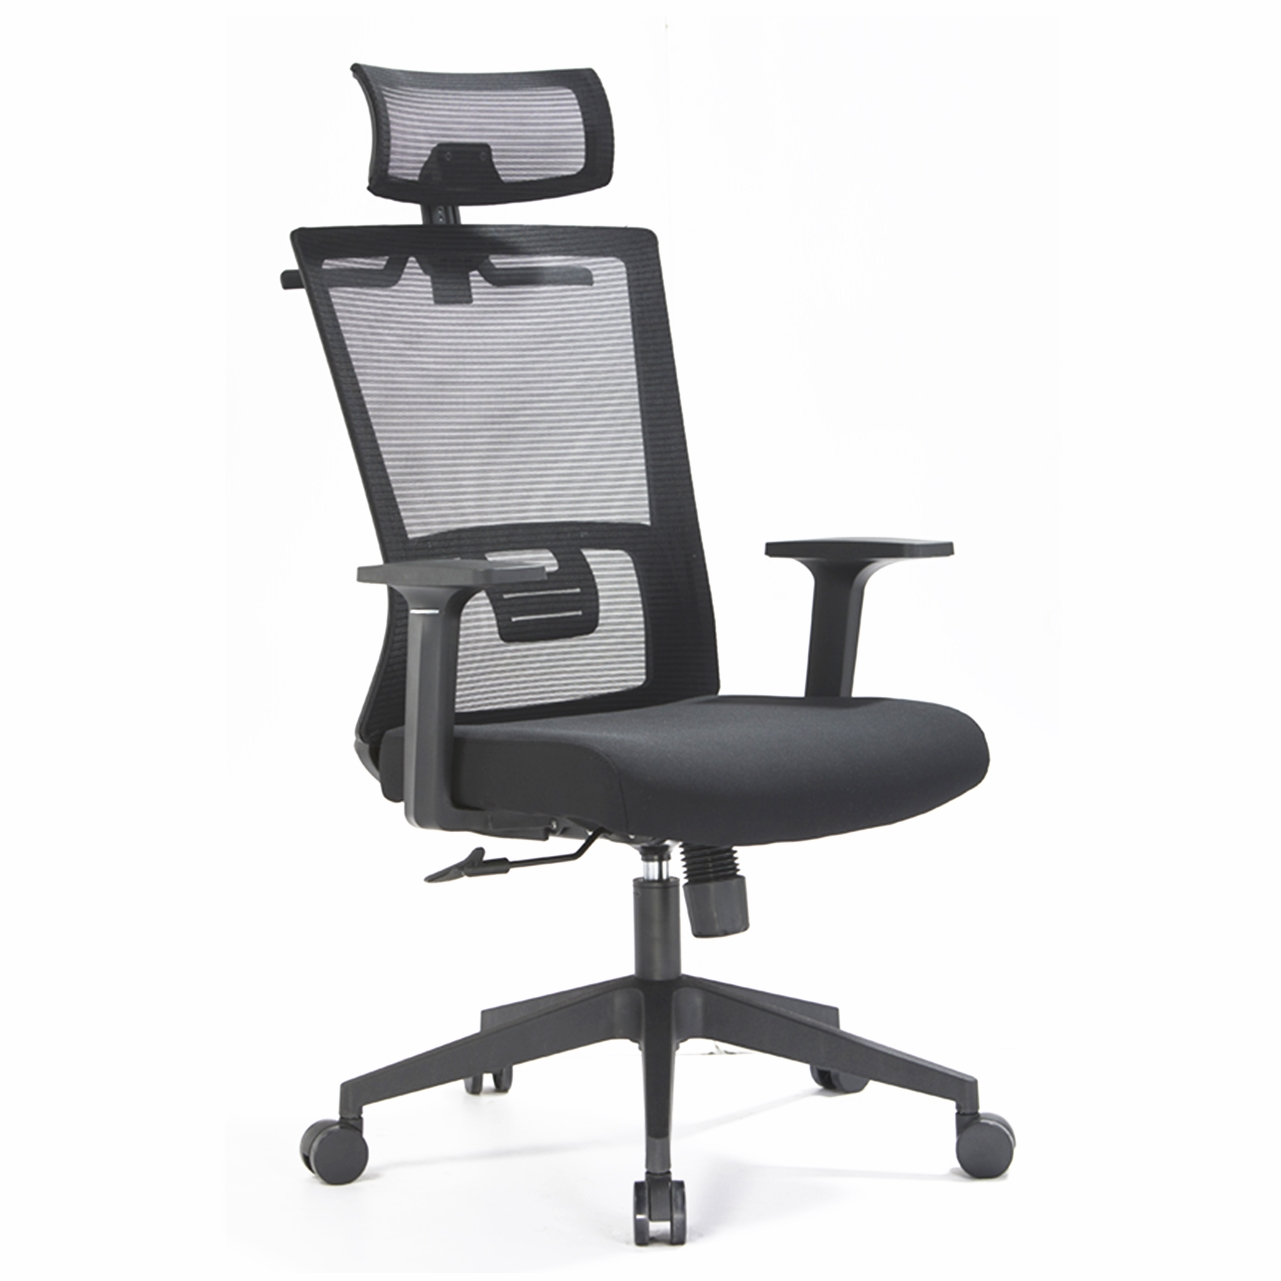 Model: 5013 Lumbar support modern  ergonomic executive office chair Featured Image